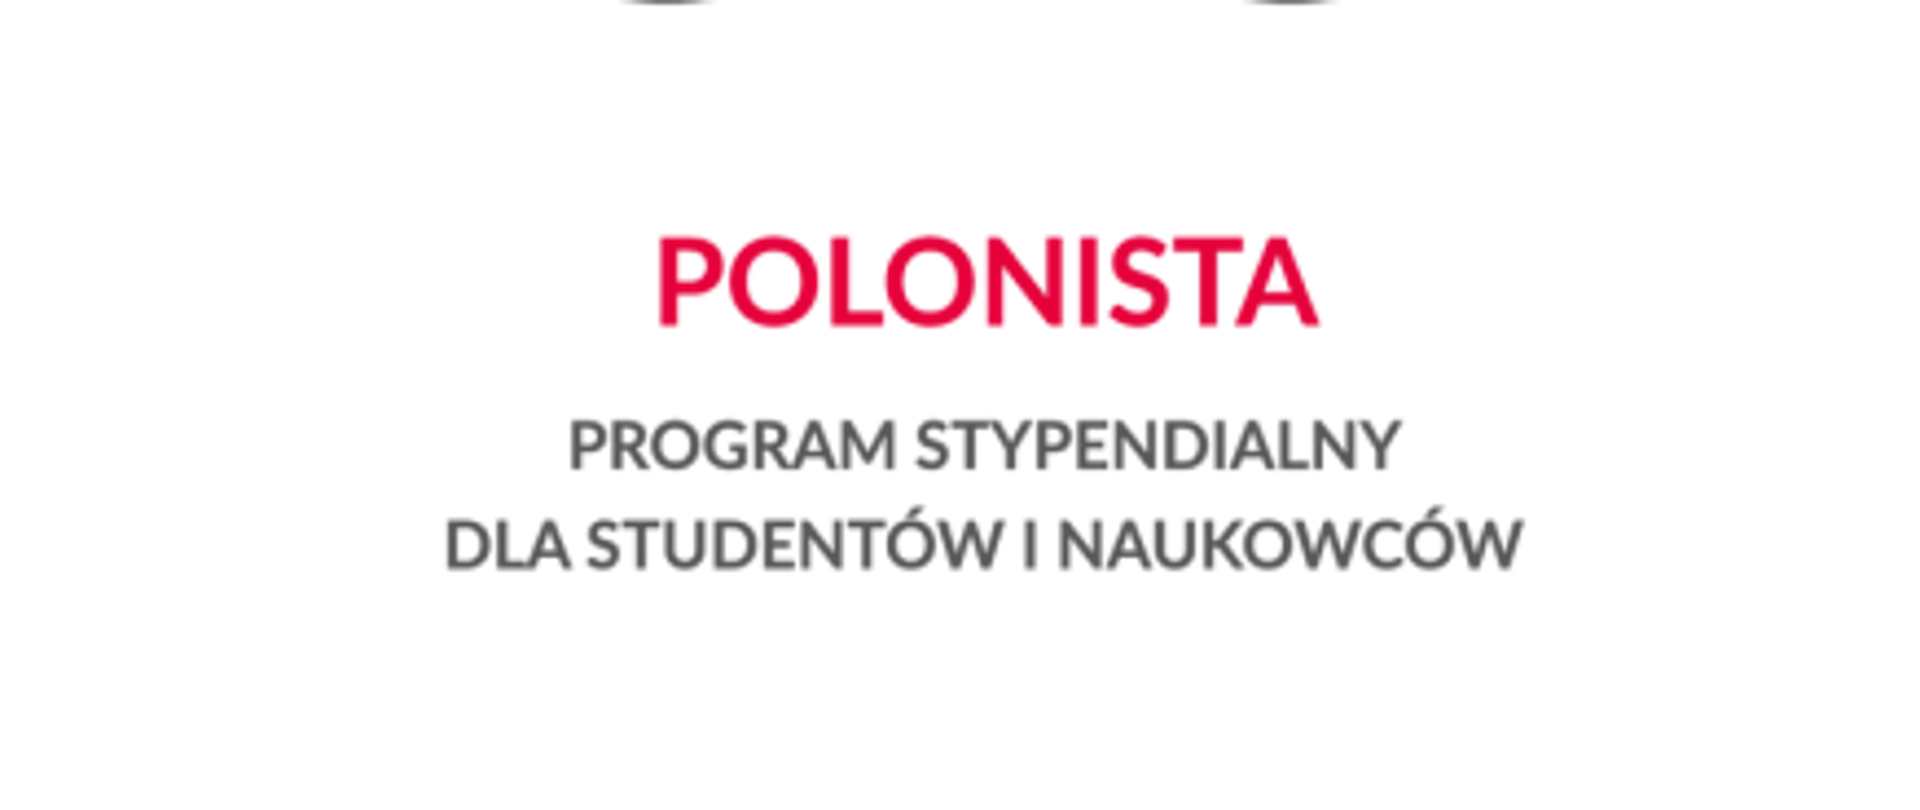 Polonista - program stypendialny